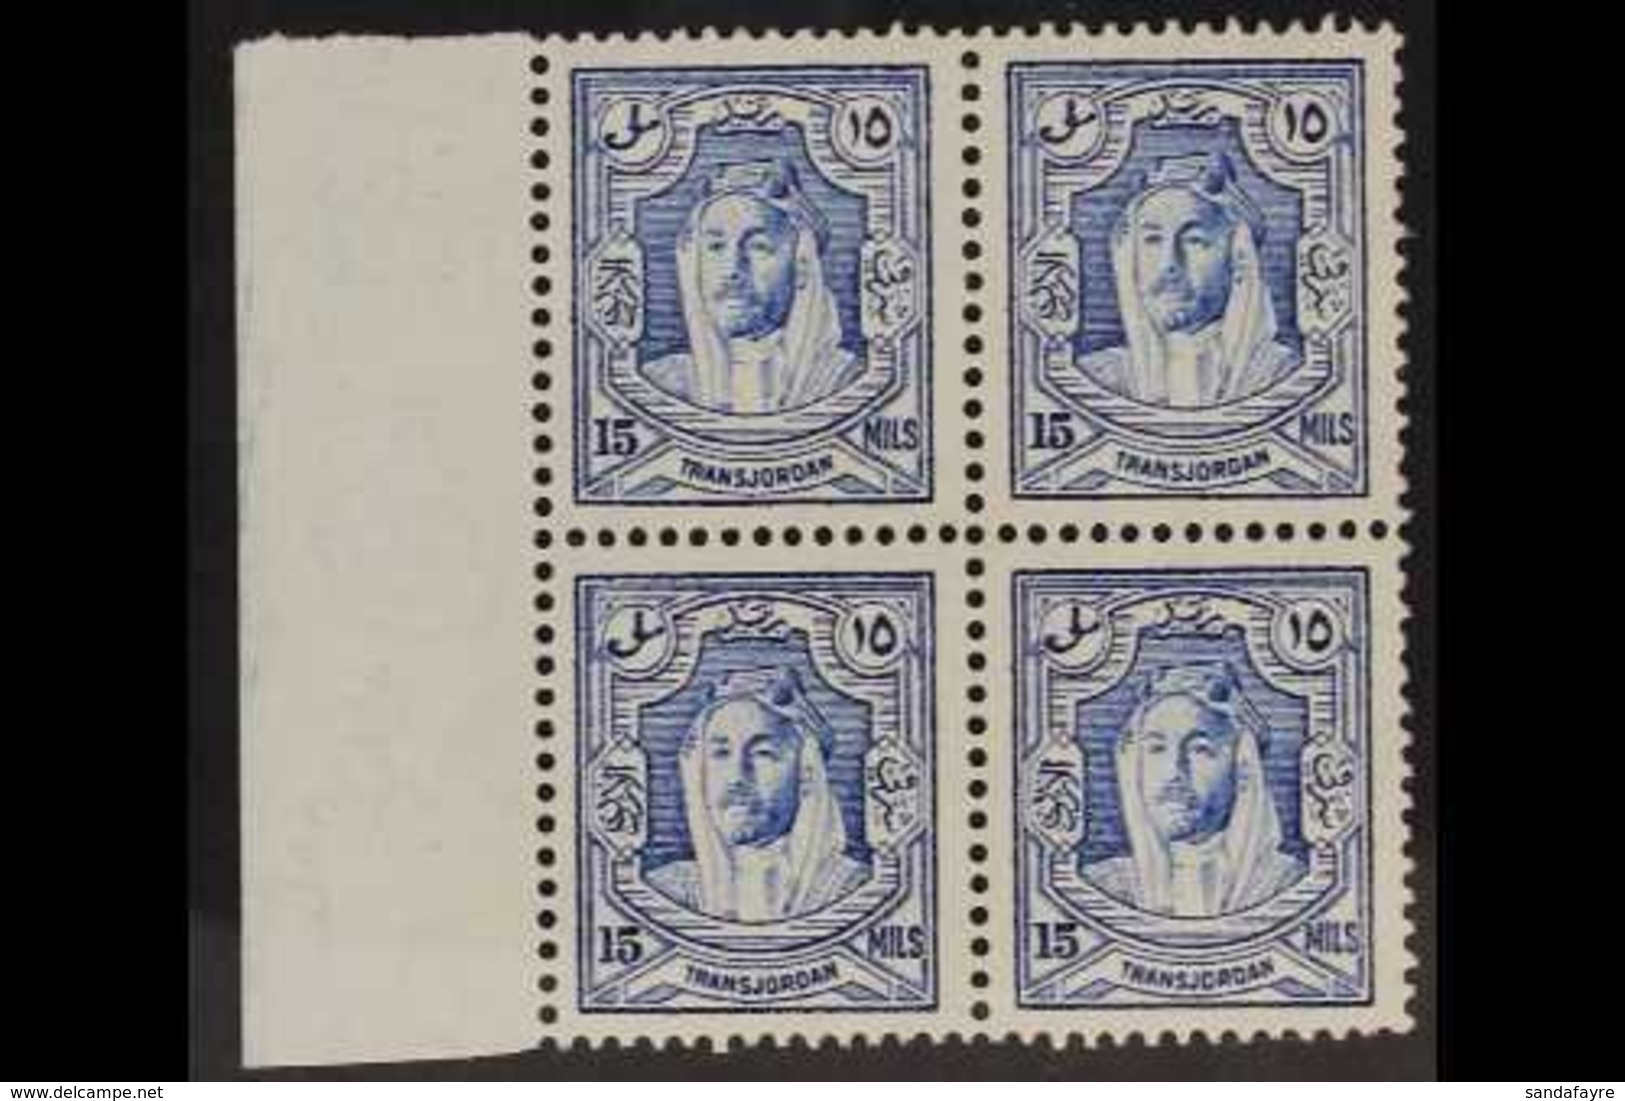 1930-39 15m Ultramarine, Perf 13½ X 13, SG 200b, Marginal BLOCK OF FOUR, Never Hinged Mint. For More Images, Please Visi - Jordanien